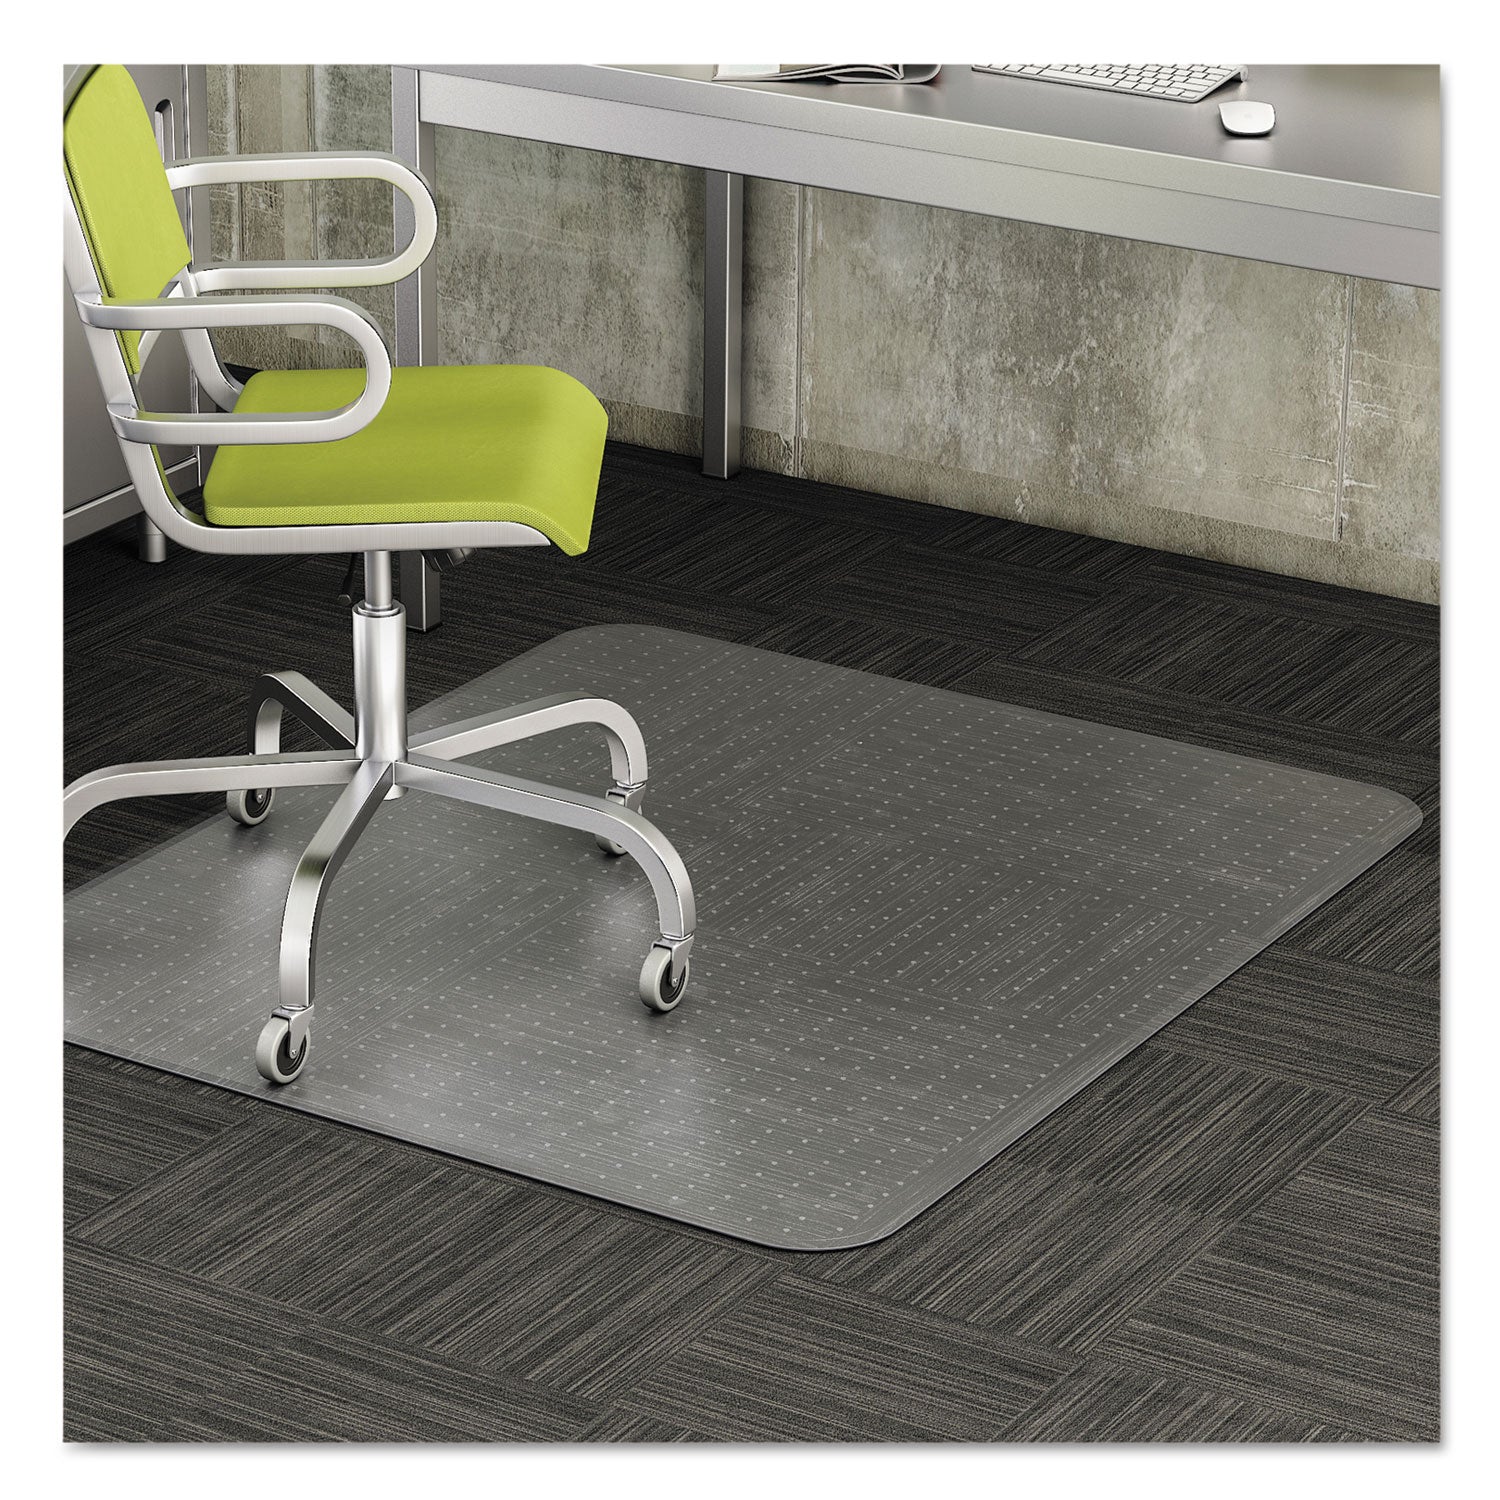 DuraMat Moderate Use Chair Mat, Low Pile Carpet, Flat, 46 x 60, Rectangle, Clear - 3